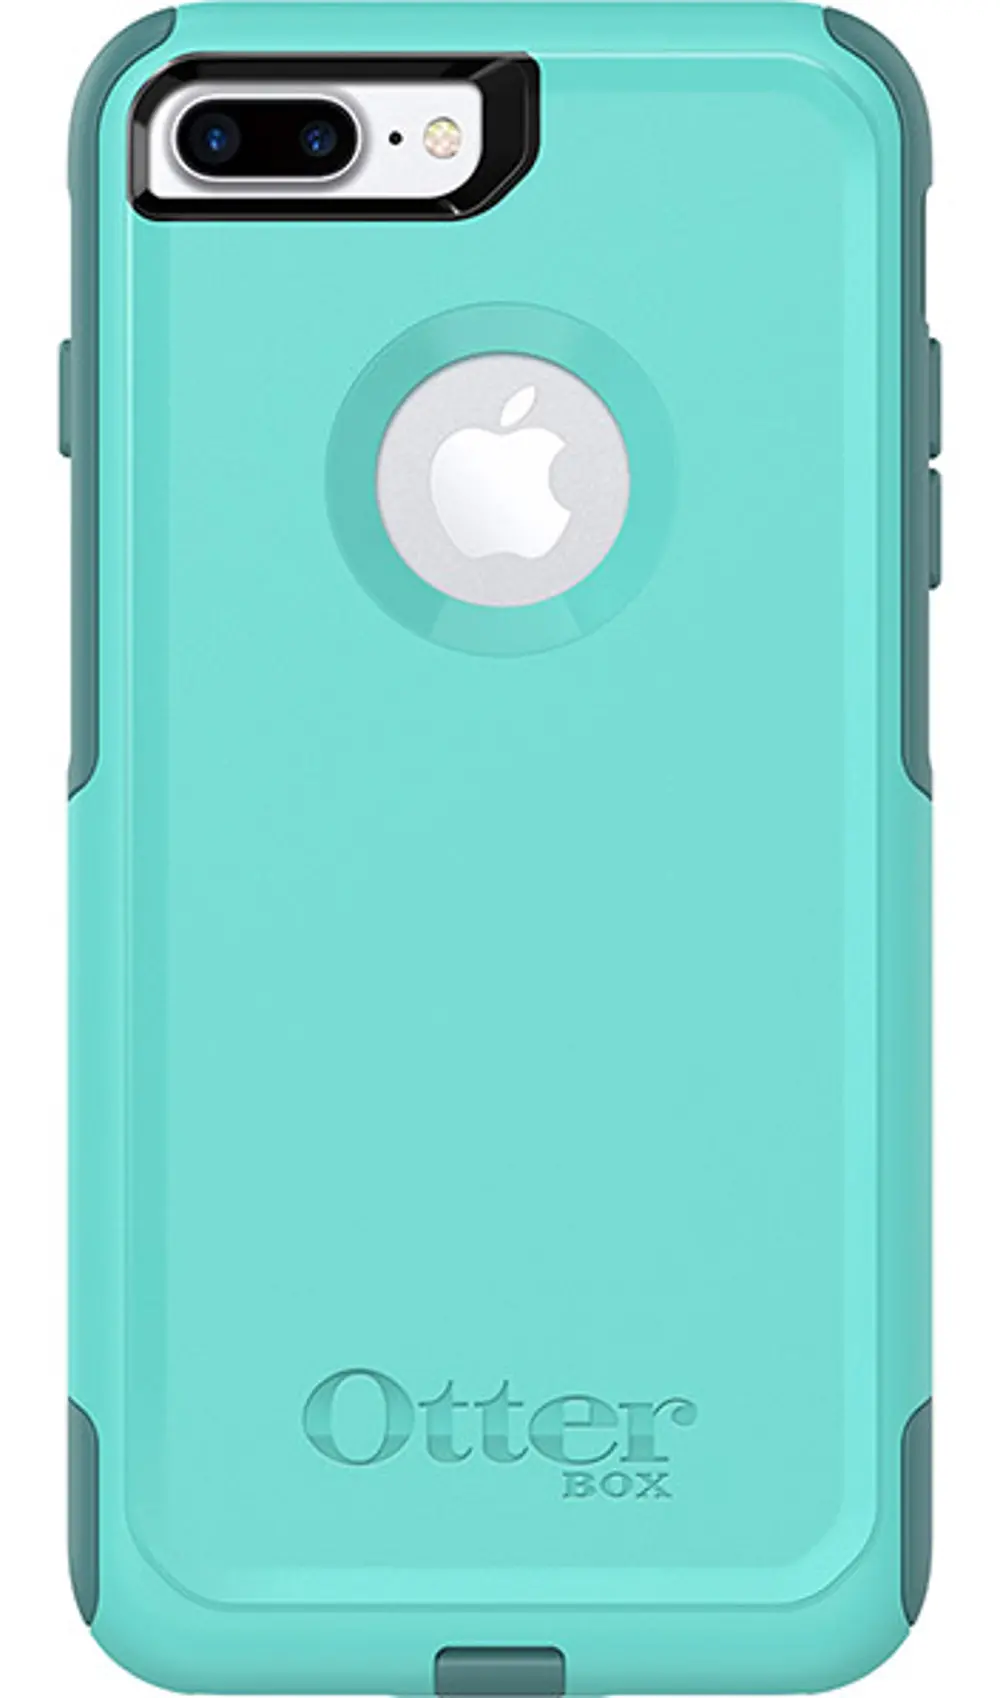 77-53914 OtterBox iPhone 7 Plus Commuter Series Case - Aqua Mint-1